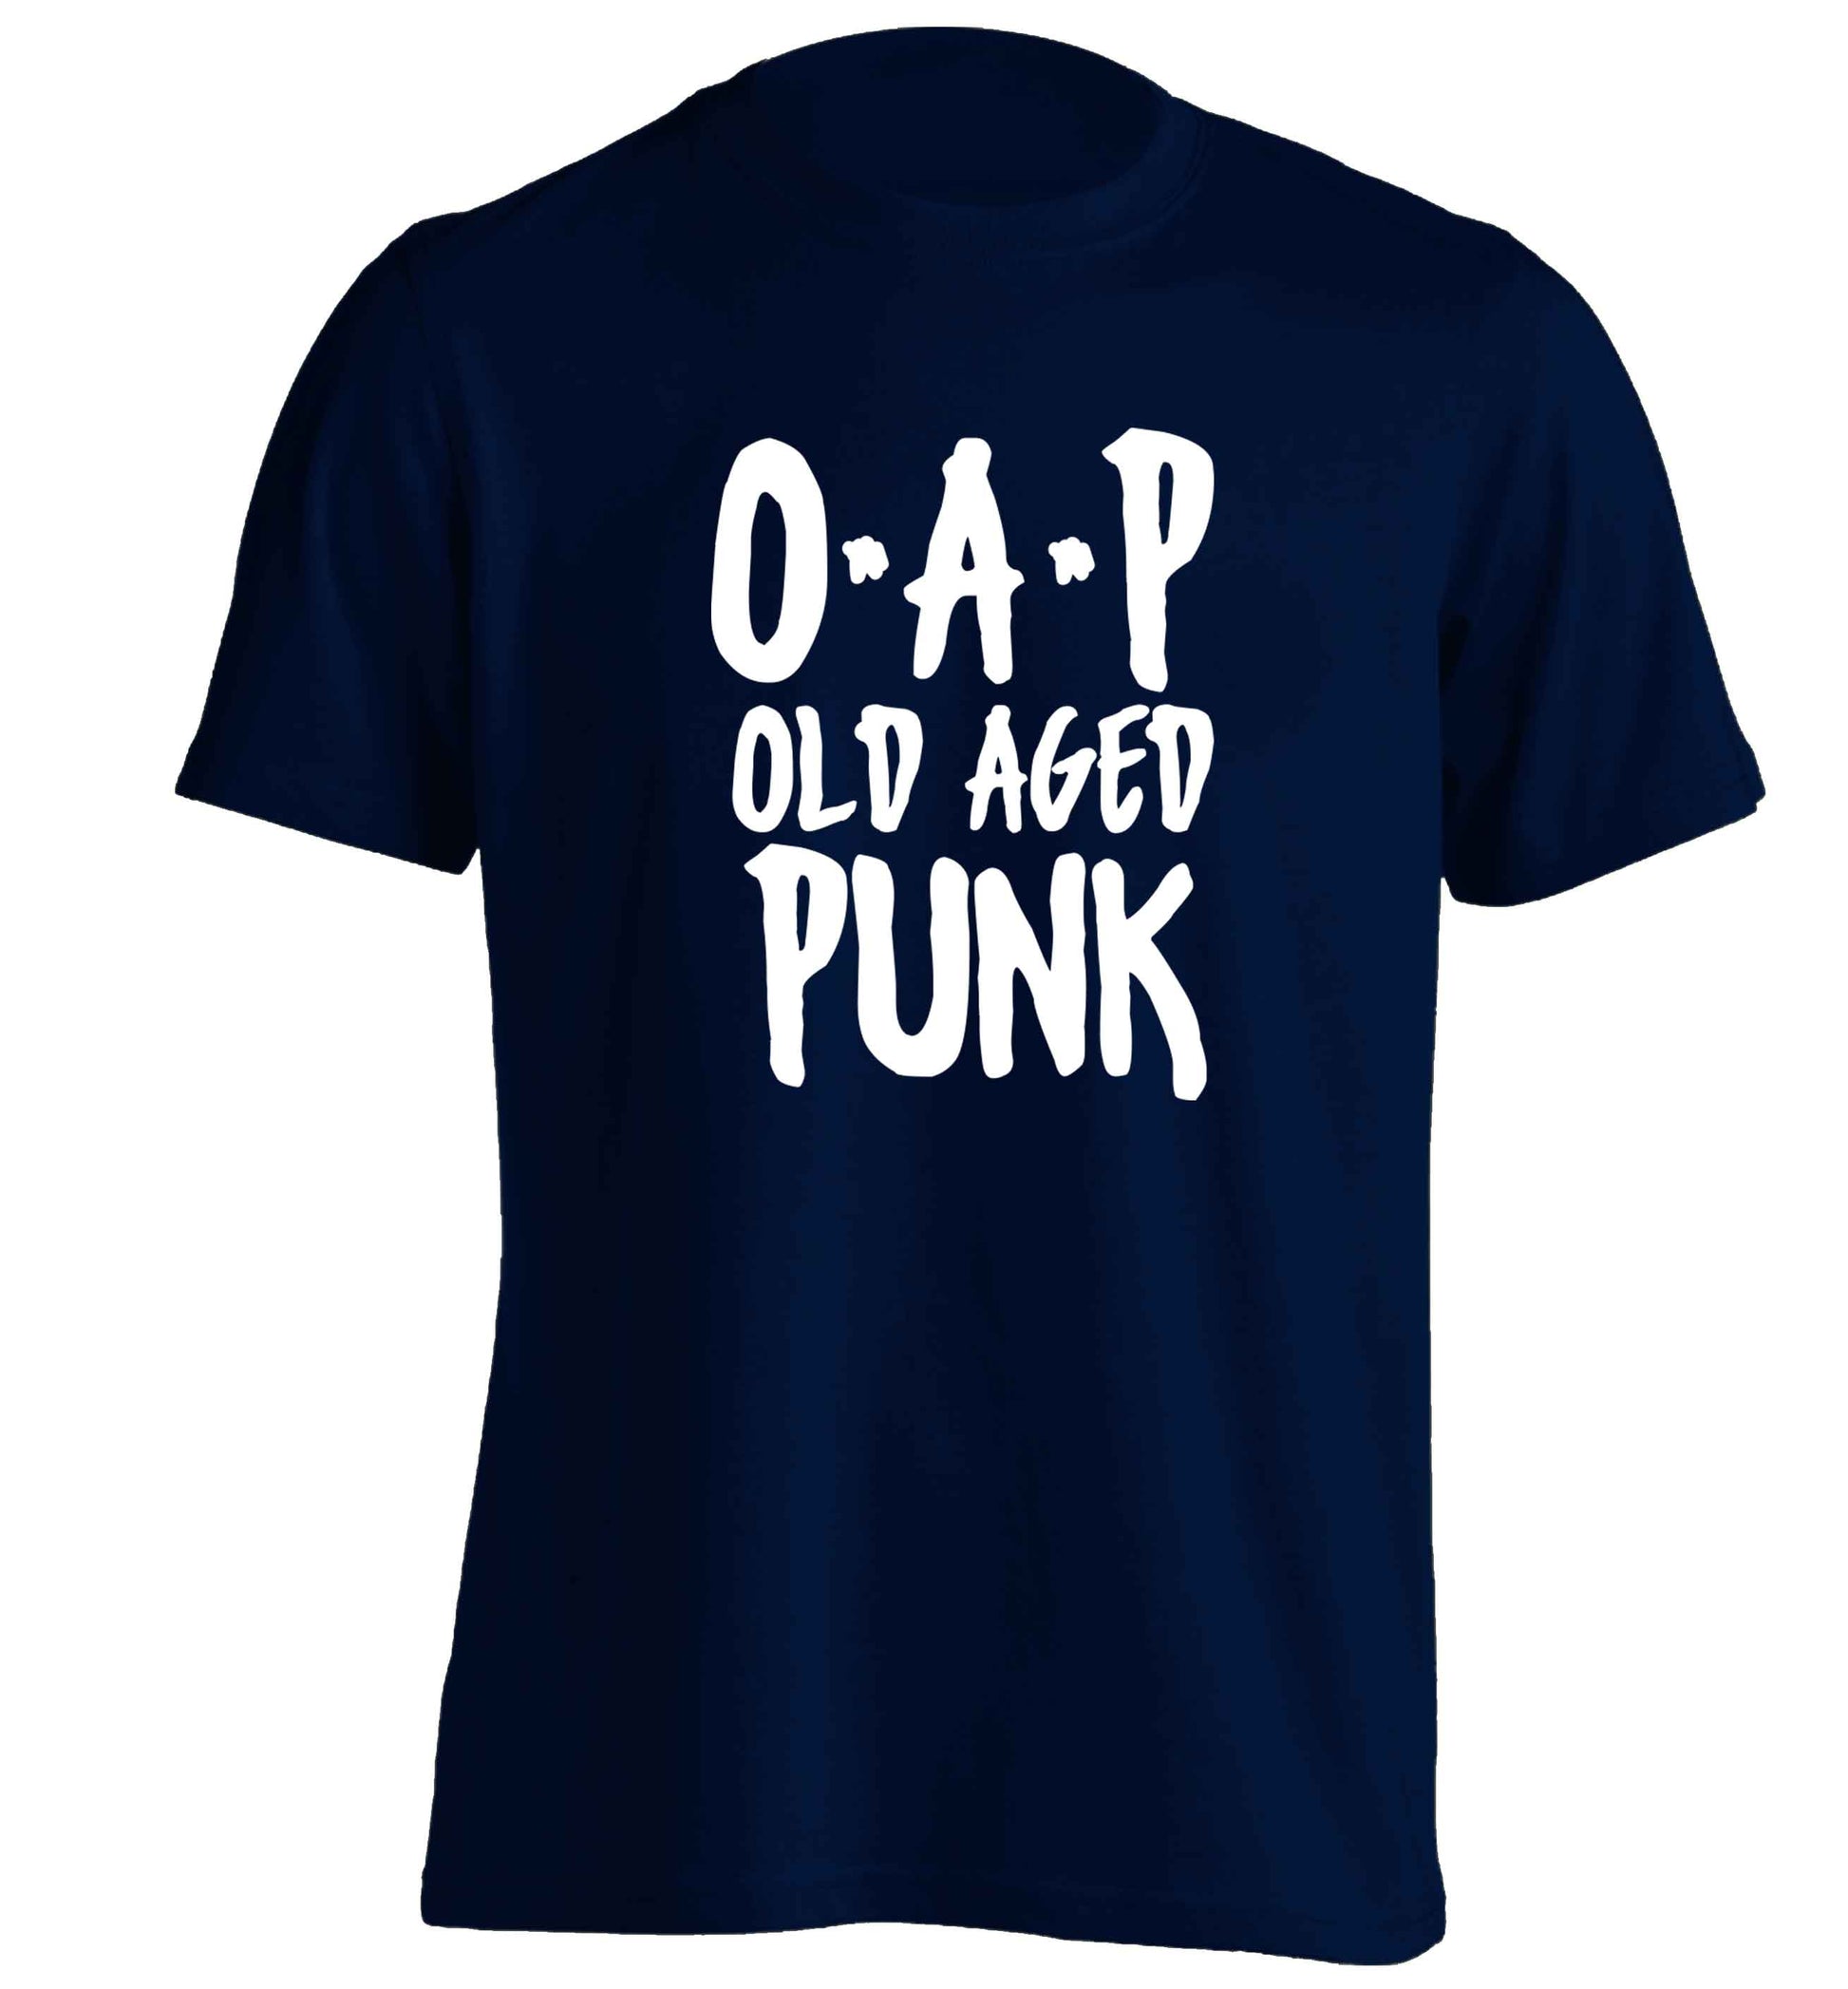 O.A.P Old Age Punk adults unisex navy Tshirt 2XL